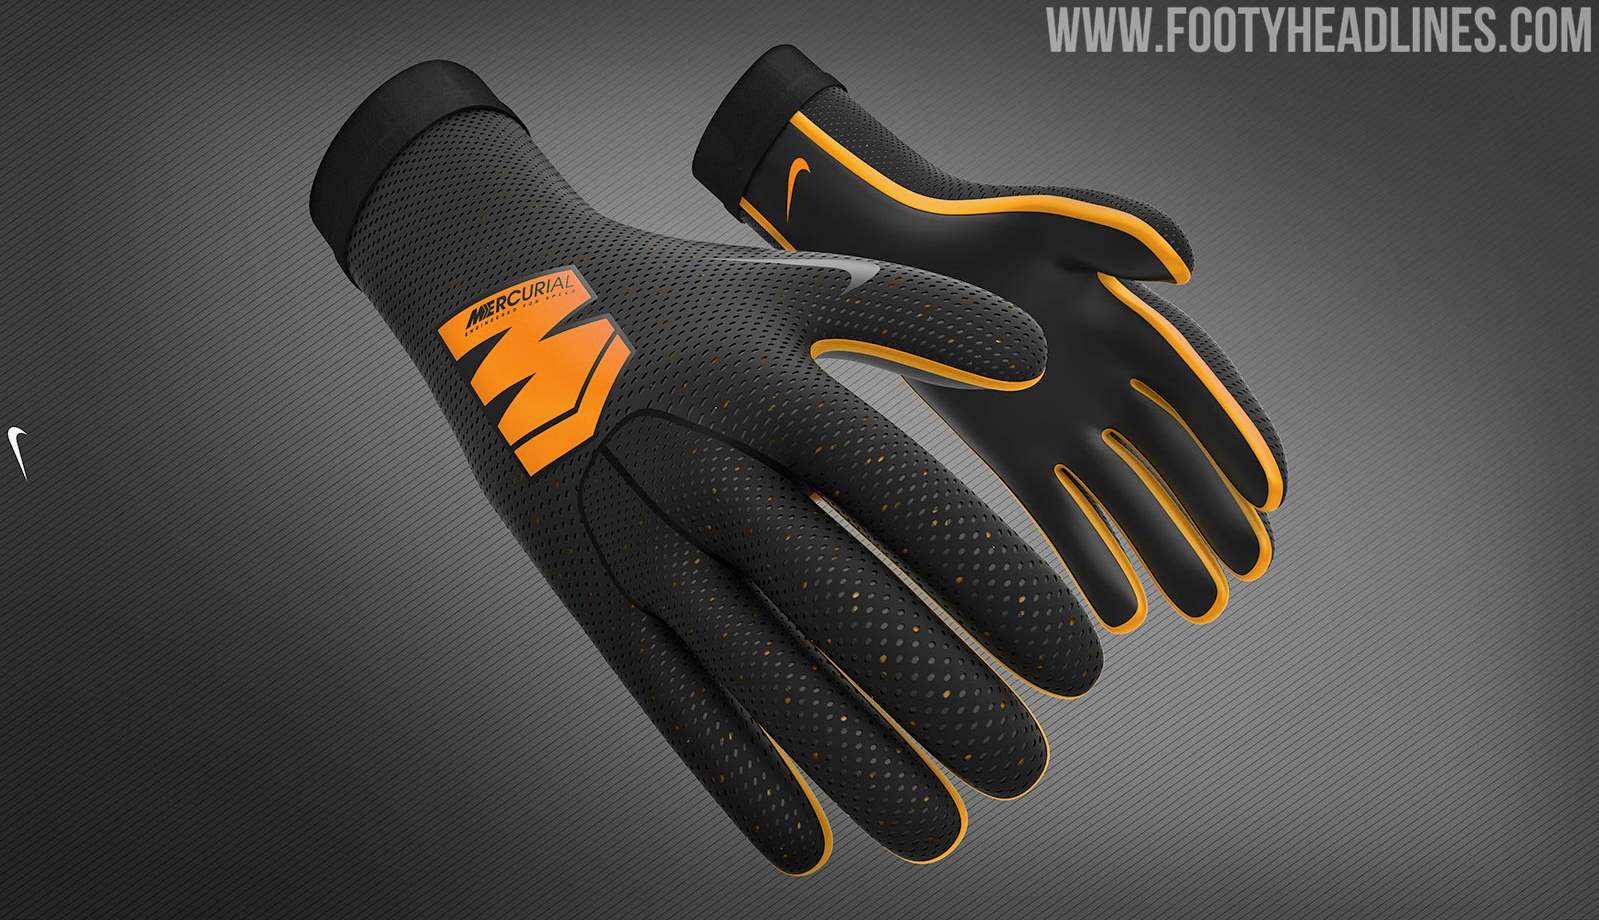 Verschillende goederen kwaadheid de vrije loop geven neutrale Nike Copy? All-New Strapless Adidas Predator 20 Goalkeeper Gloves Released  - Extra Latex Version - Footy Headlines